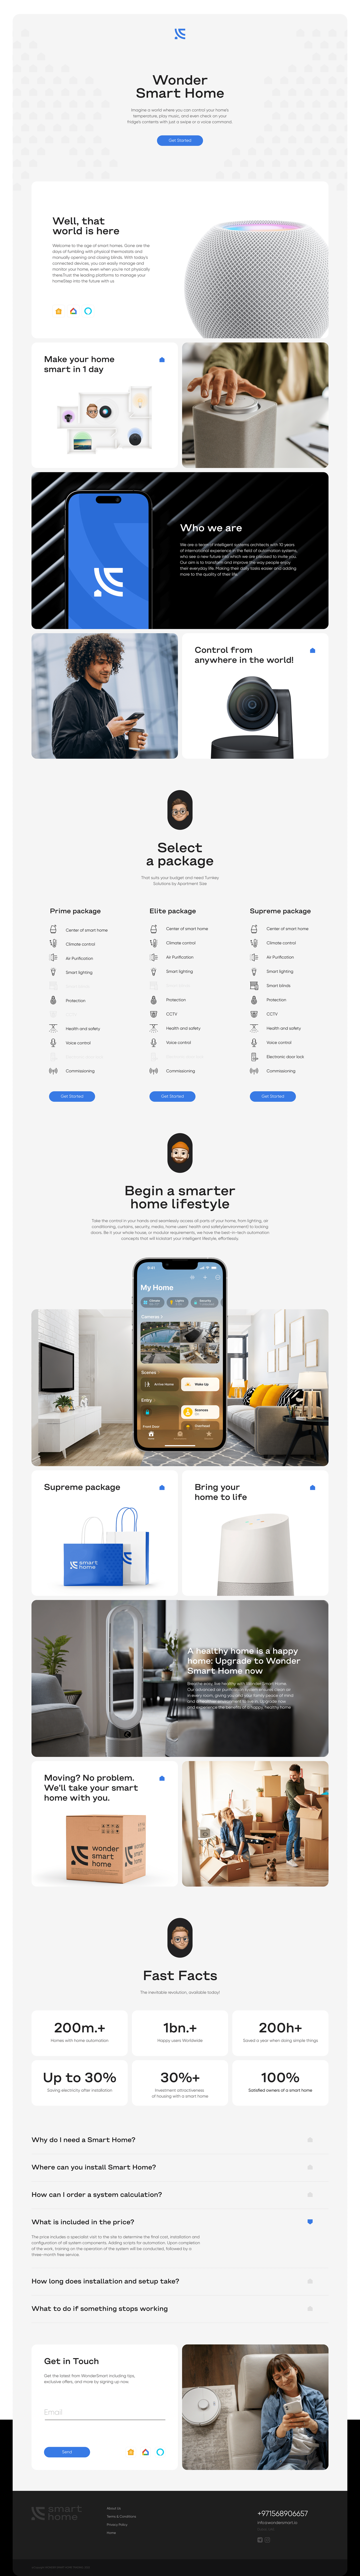 Wonder smart home | web. — Изображение №9 — Интерфейсы на Dprofile